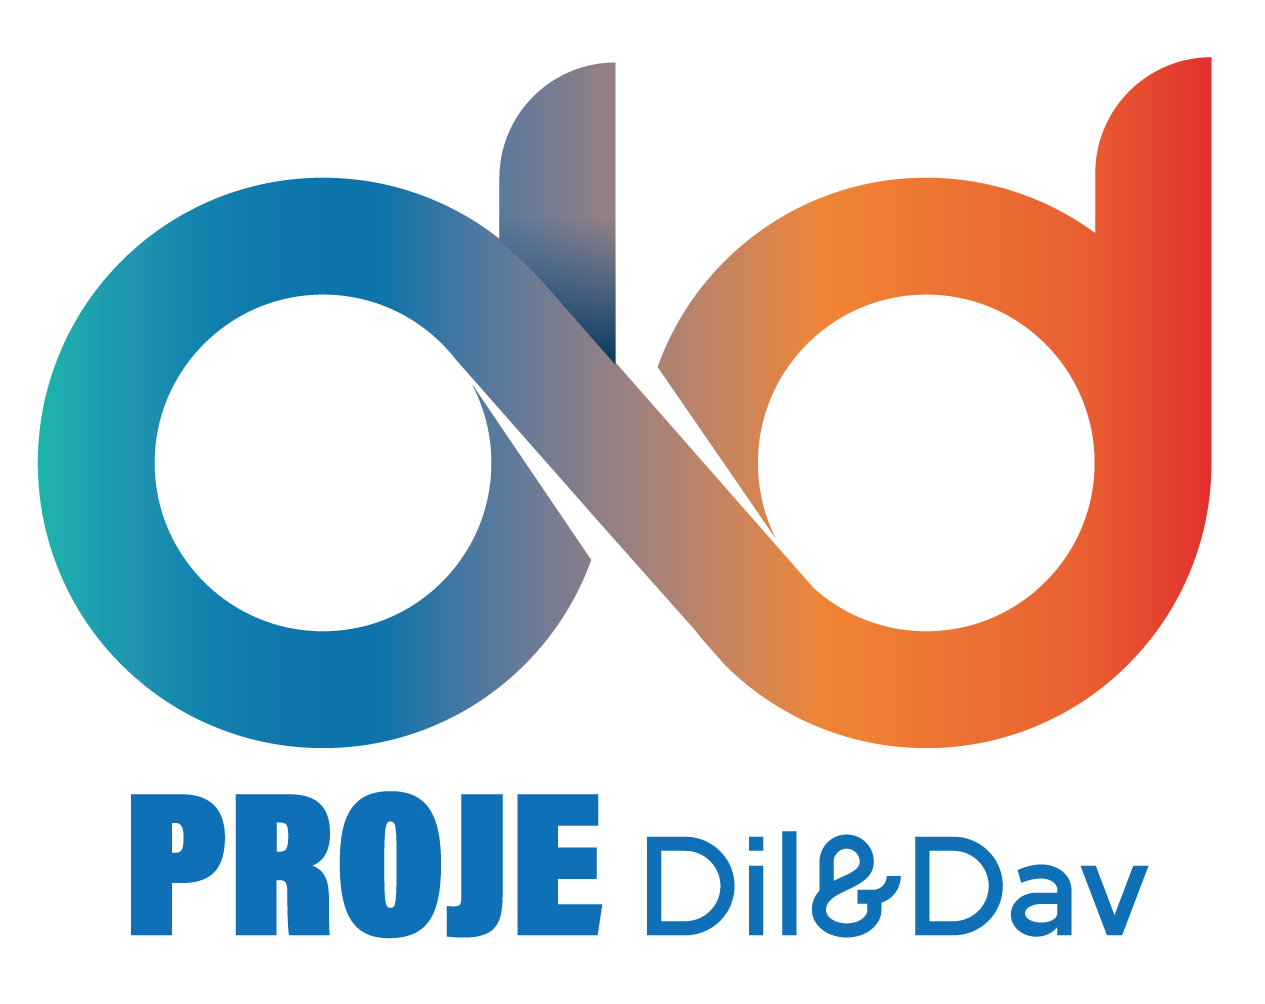 Proje Dil & Dav